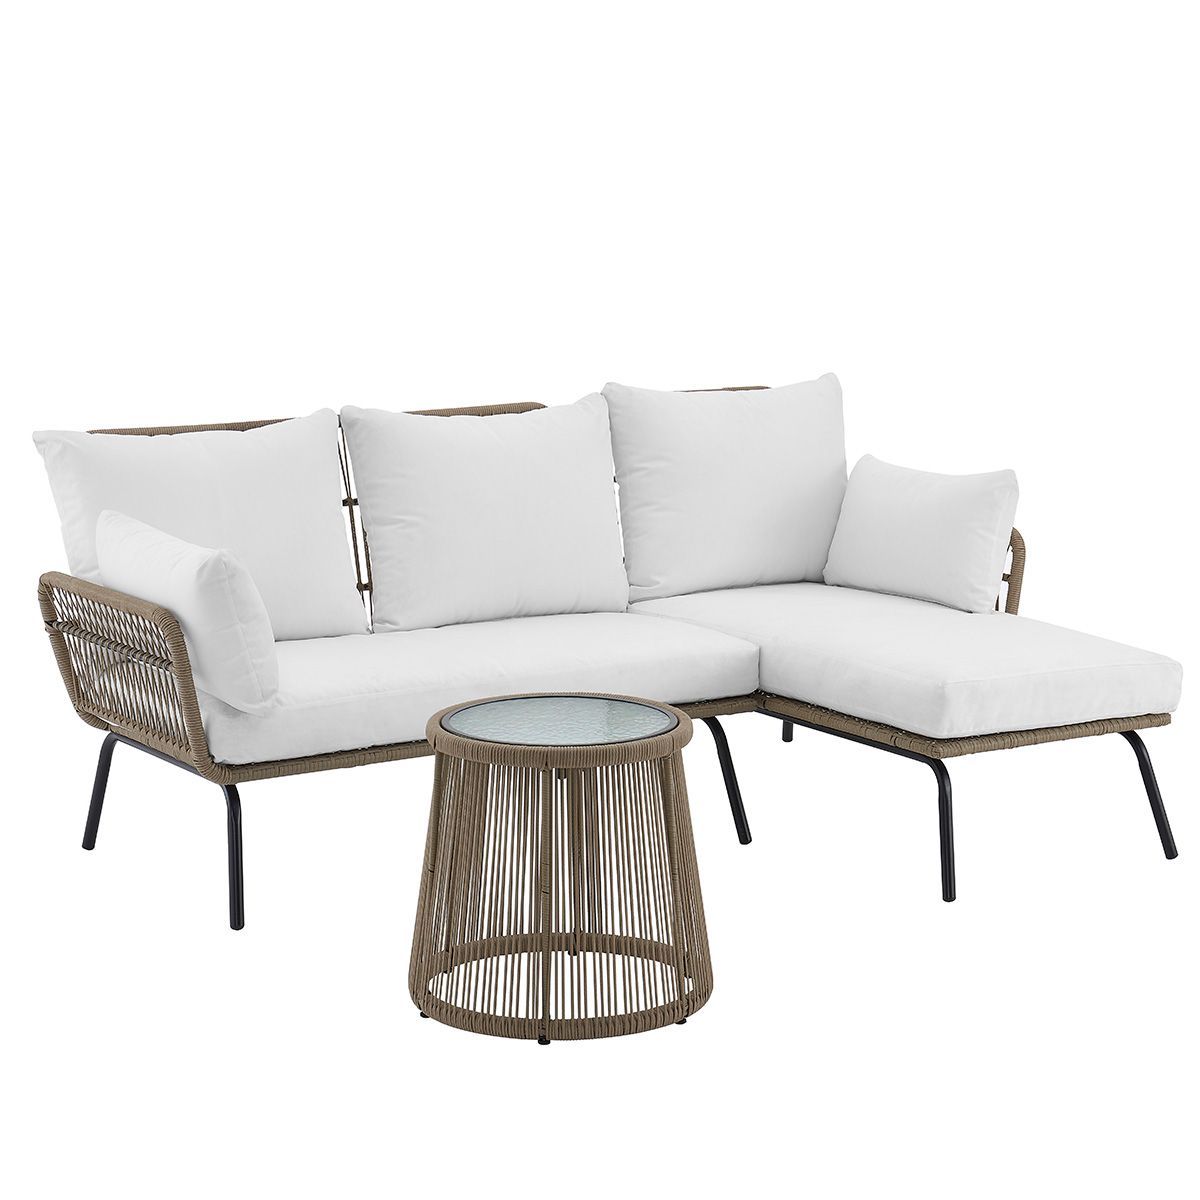 Barton 3-Pieces Outdoor Patio Sectional Set Wicker Sectional Sofa Conversation Set, Cream/Beige | Target